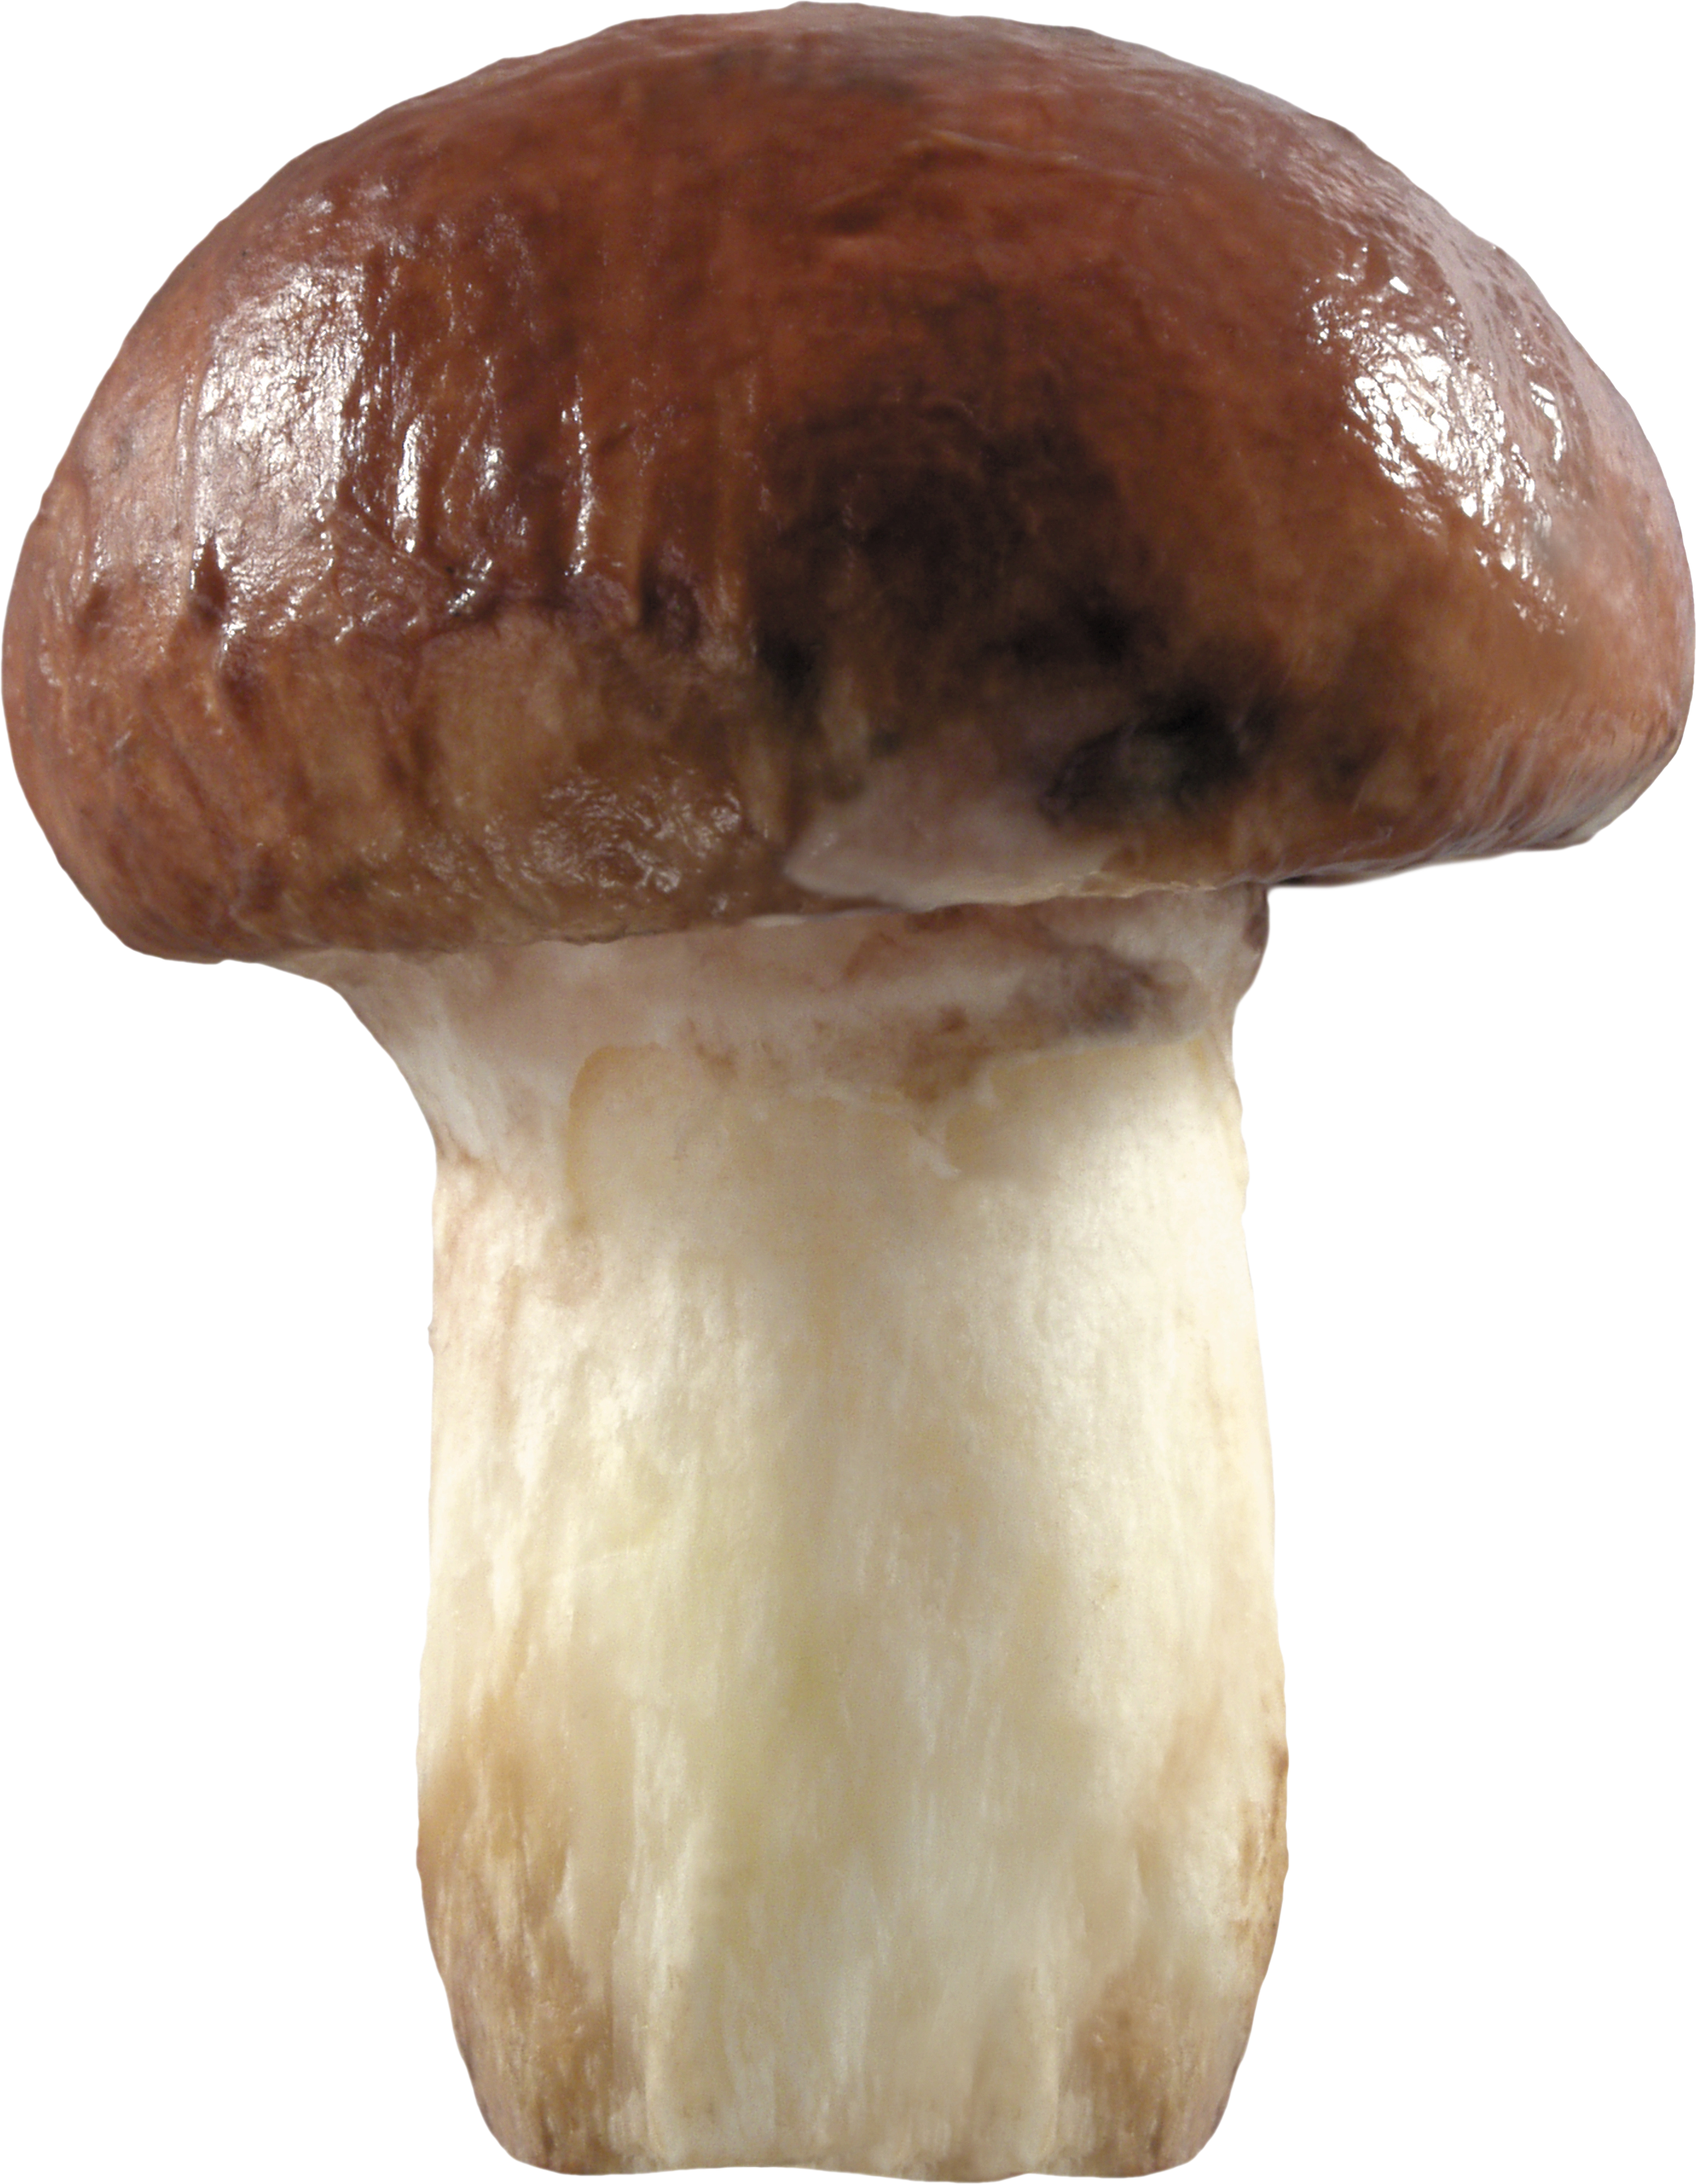 mushrooms clipart colorful mushroom